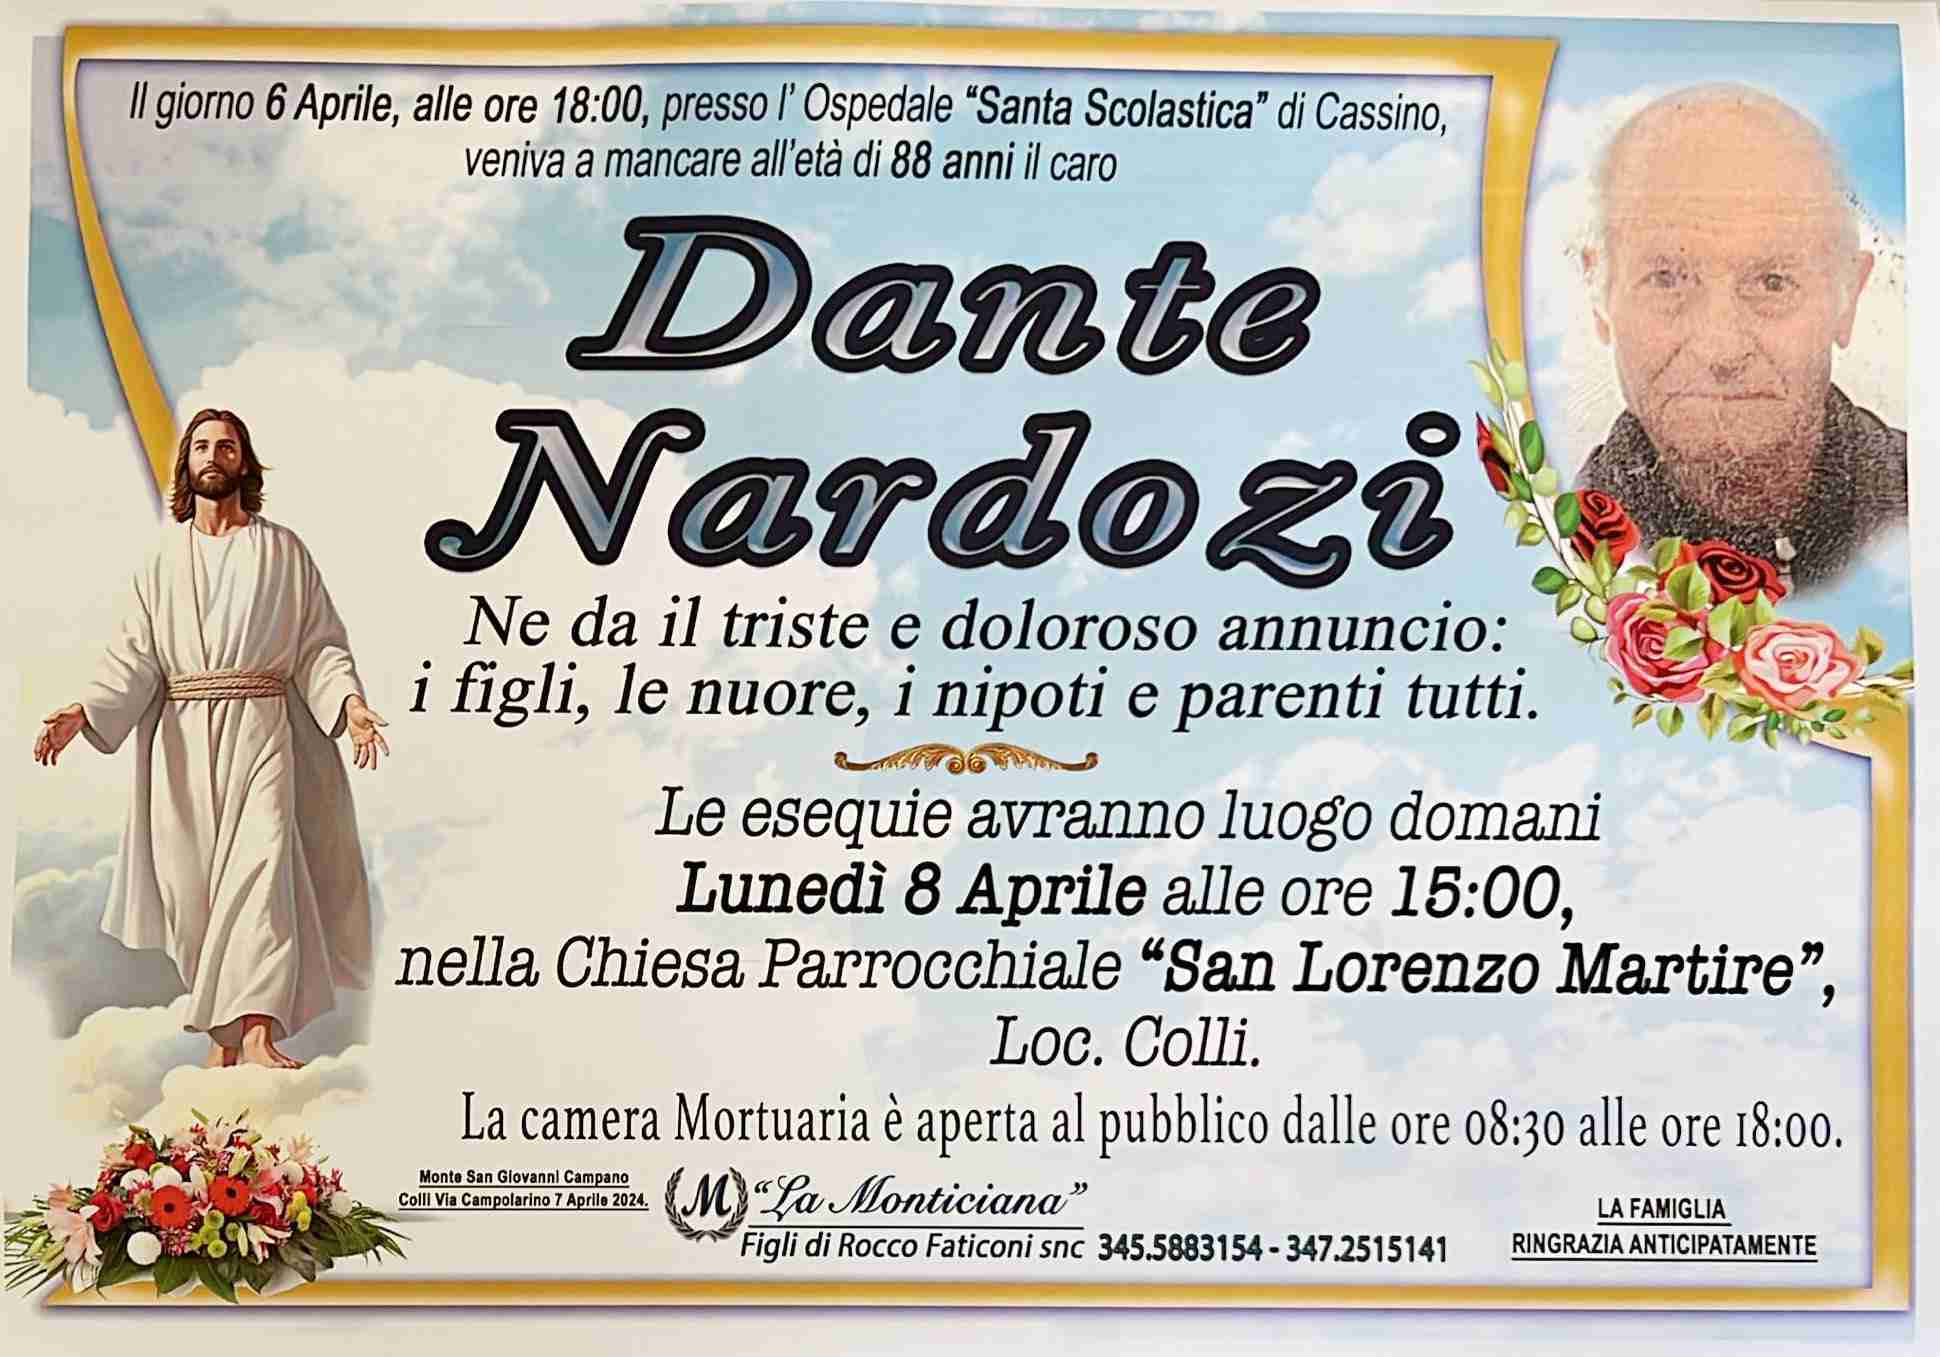 Dante Nardozi